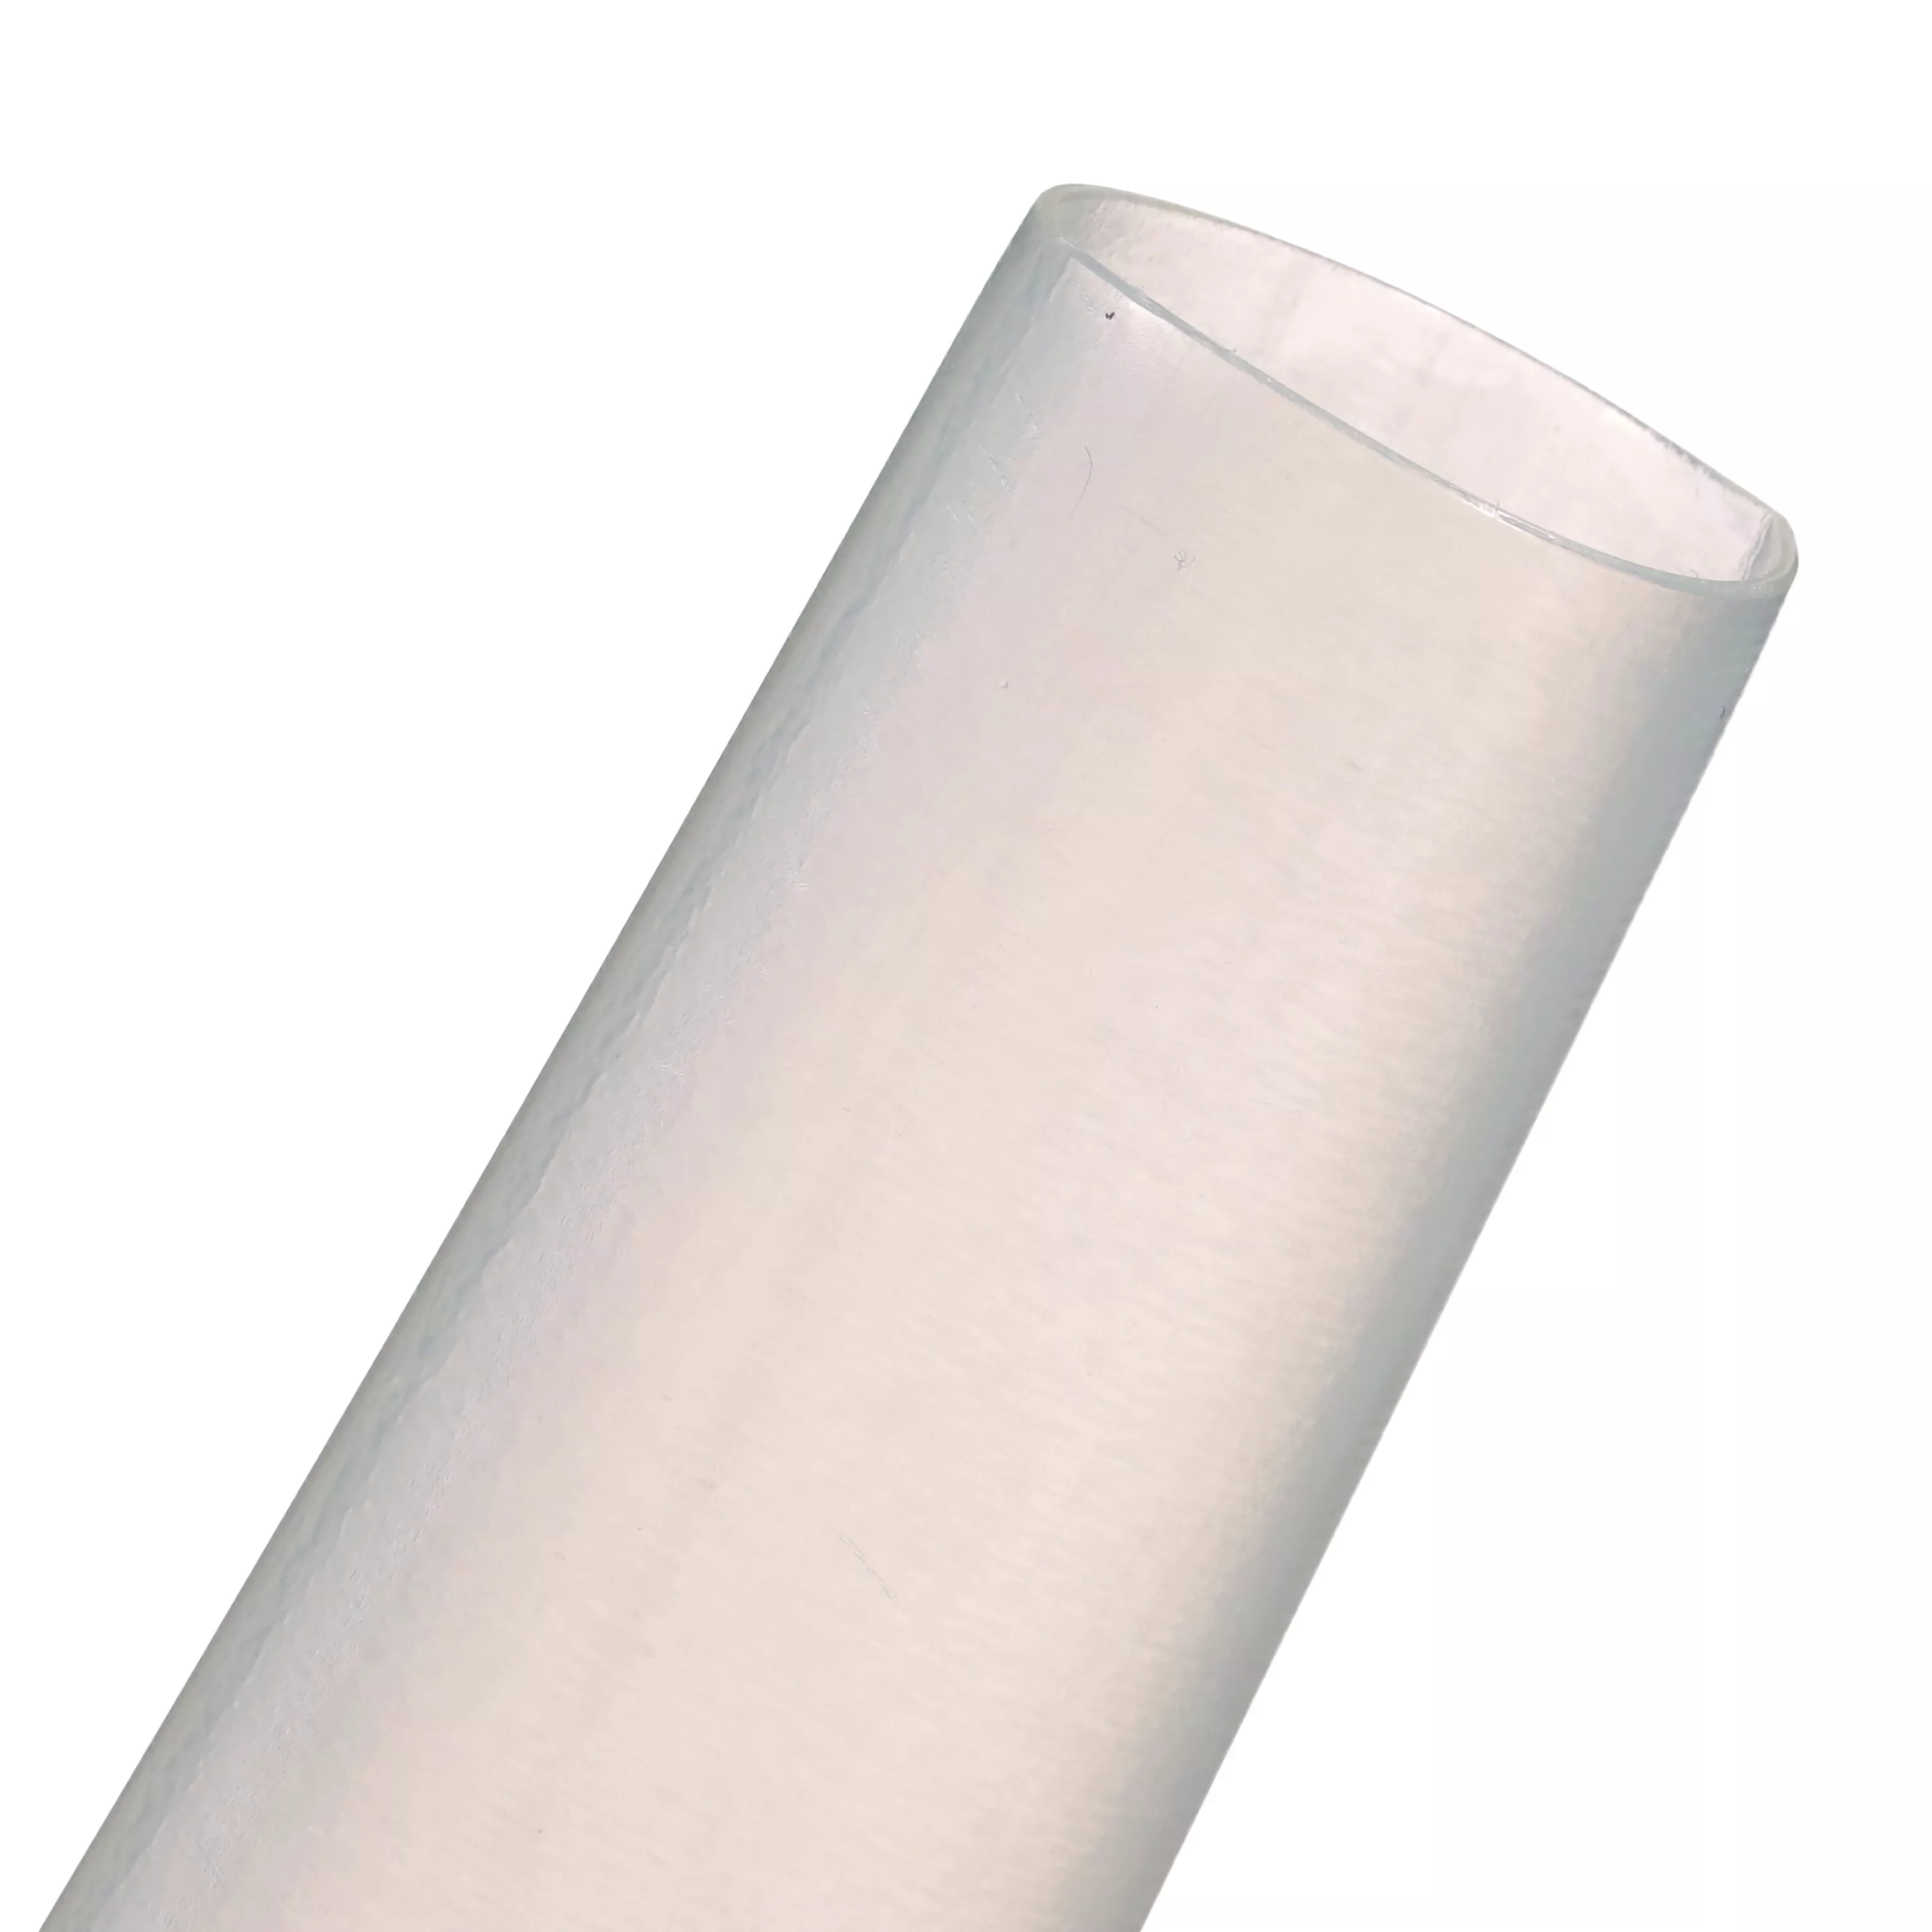 3M™ Thin-Wall Heat Shrink Tubing EPS-300, Adhesive-Lined,
3/4-48